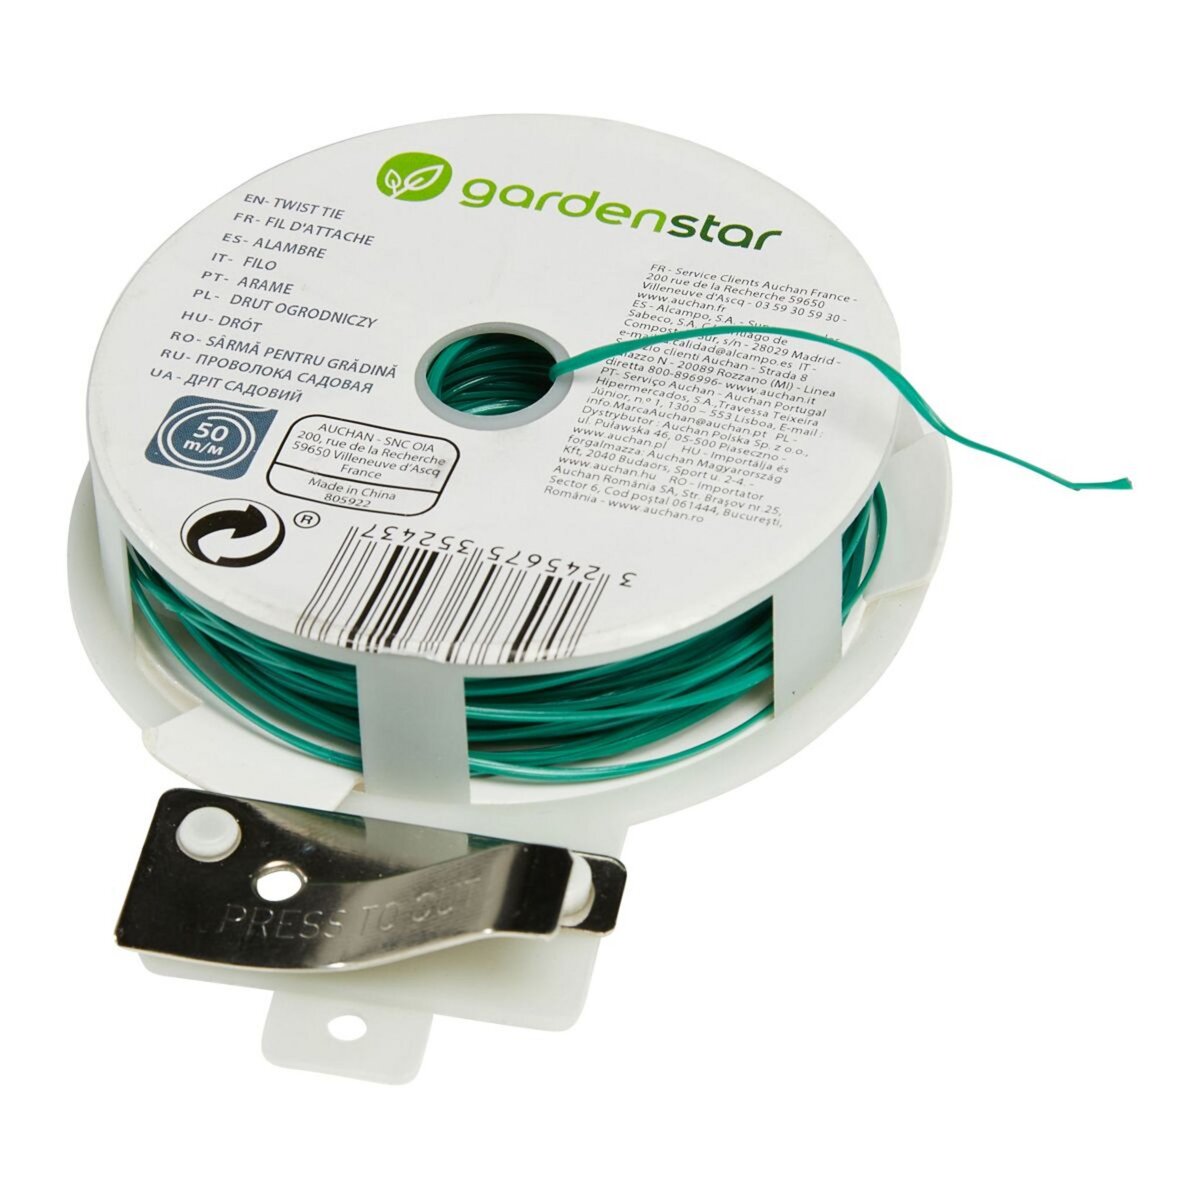 GARDENSTAR Distributeur de fil en acier vert avec cutter intégré - 50 m